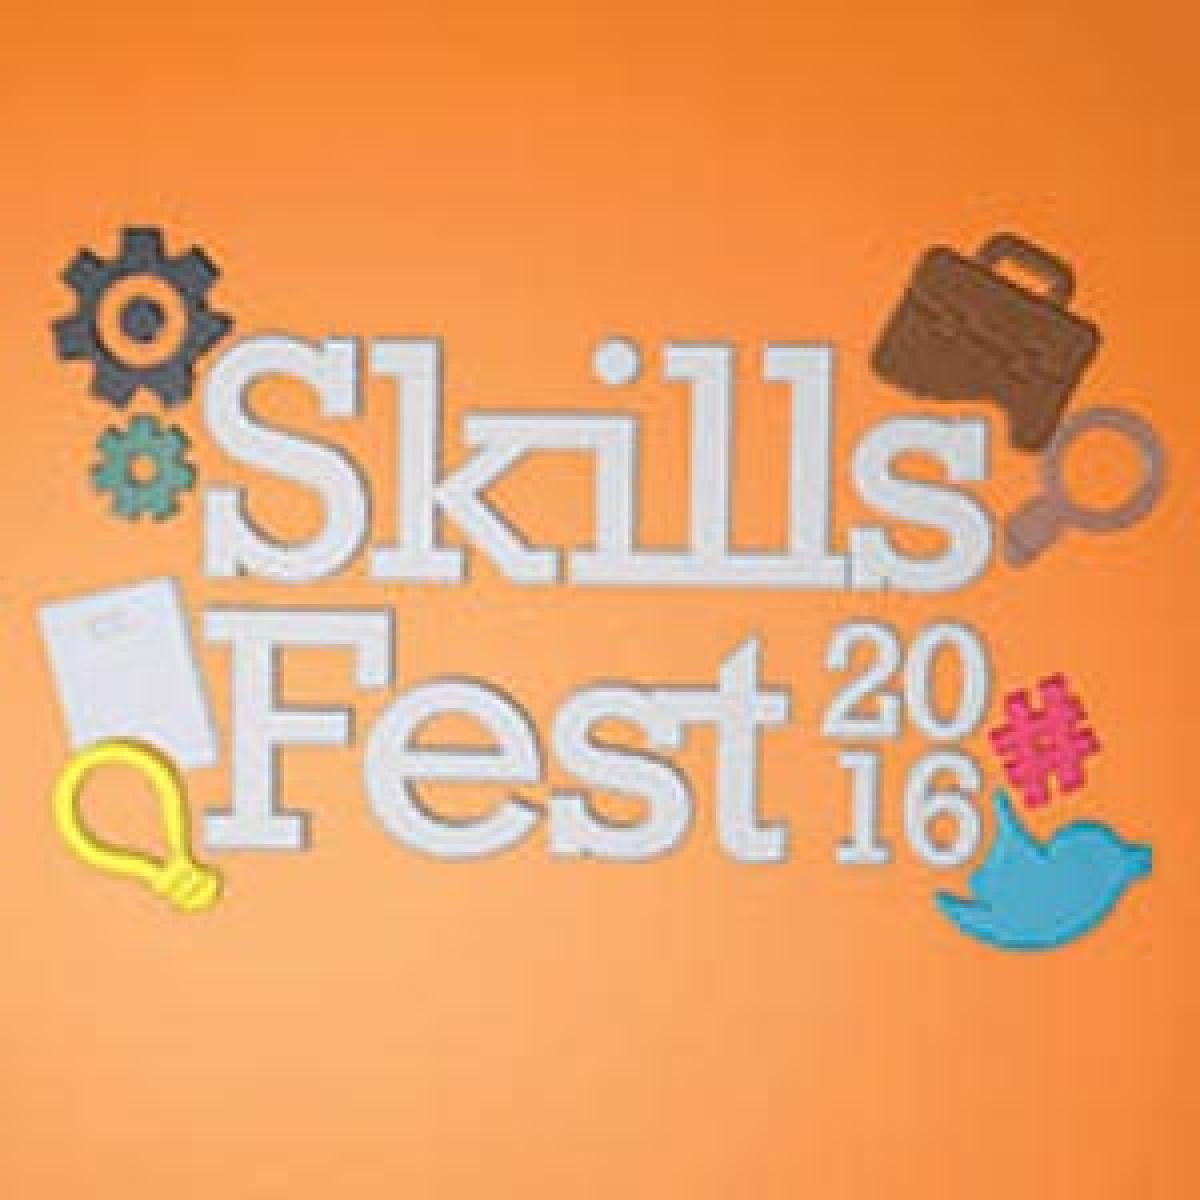 Skill Fest 2016 comes to a close